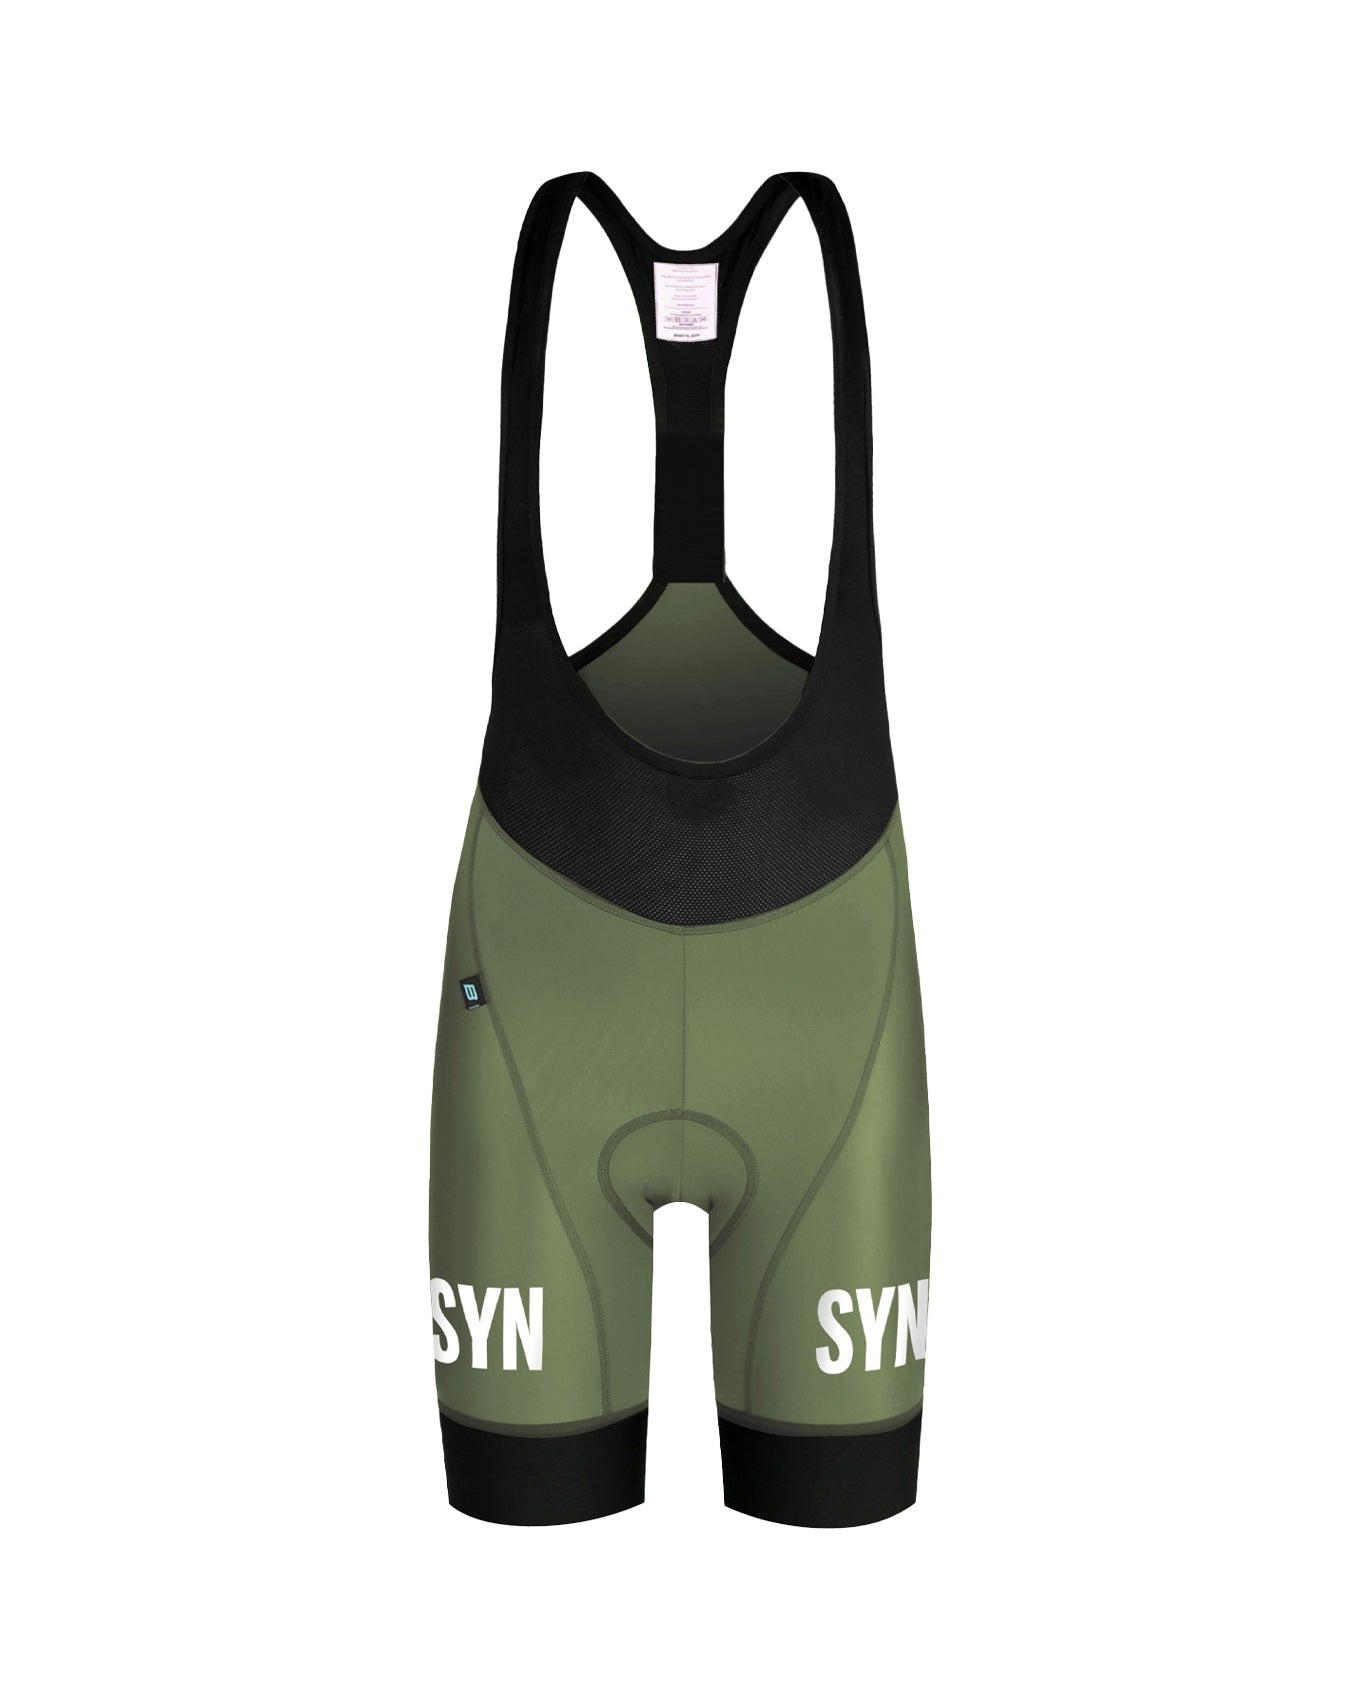 Inner shorts/cycling shorts from Decoy - McVERDI